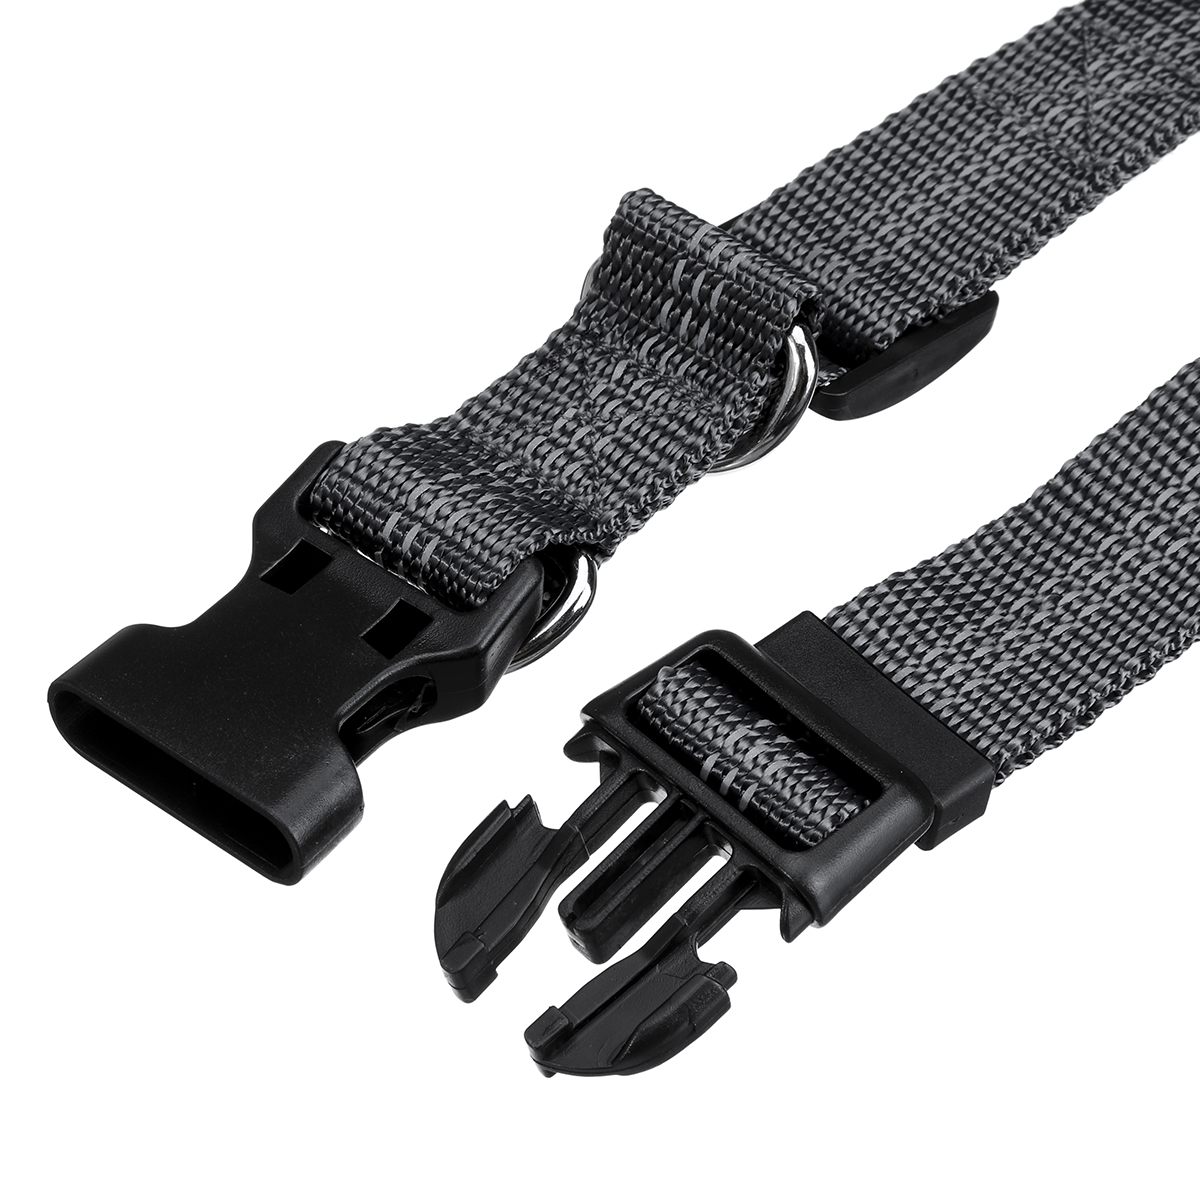 Adjustable-Elastic-Waist-Belt-Leash-Hands-Free-Pet-Dog-Walking-Hiking-Running-1587243-10